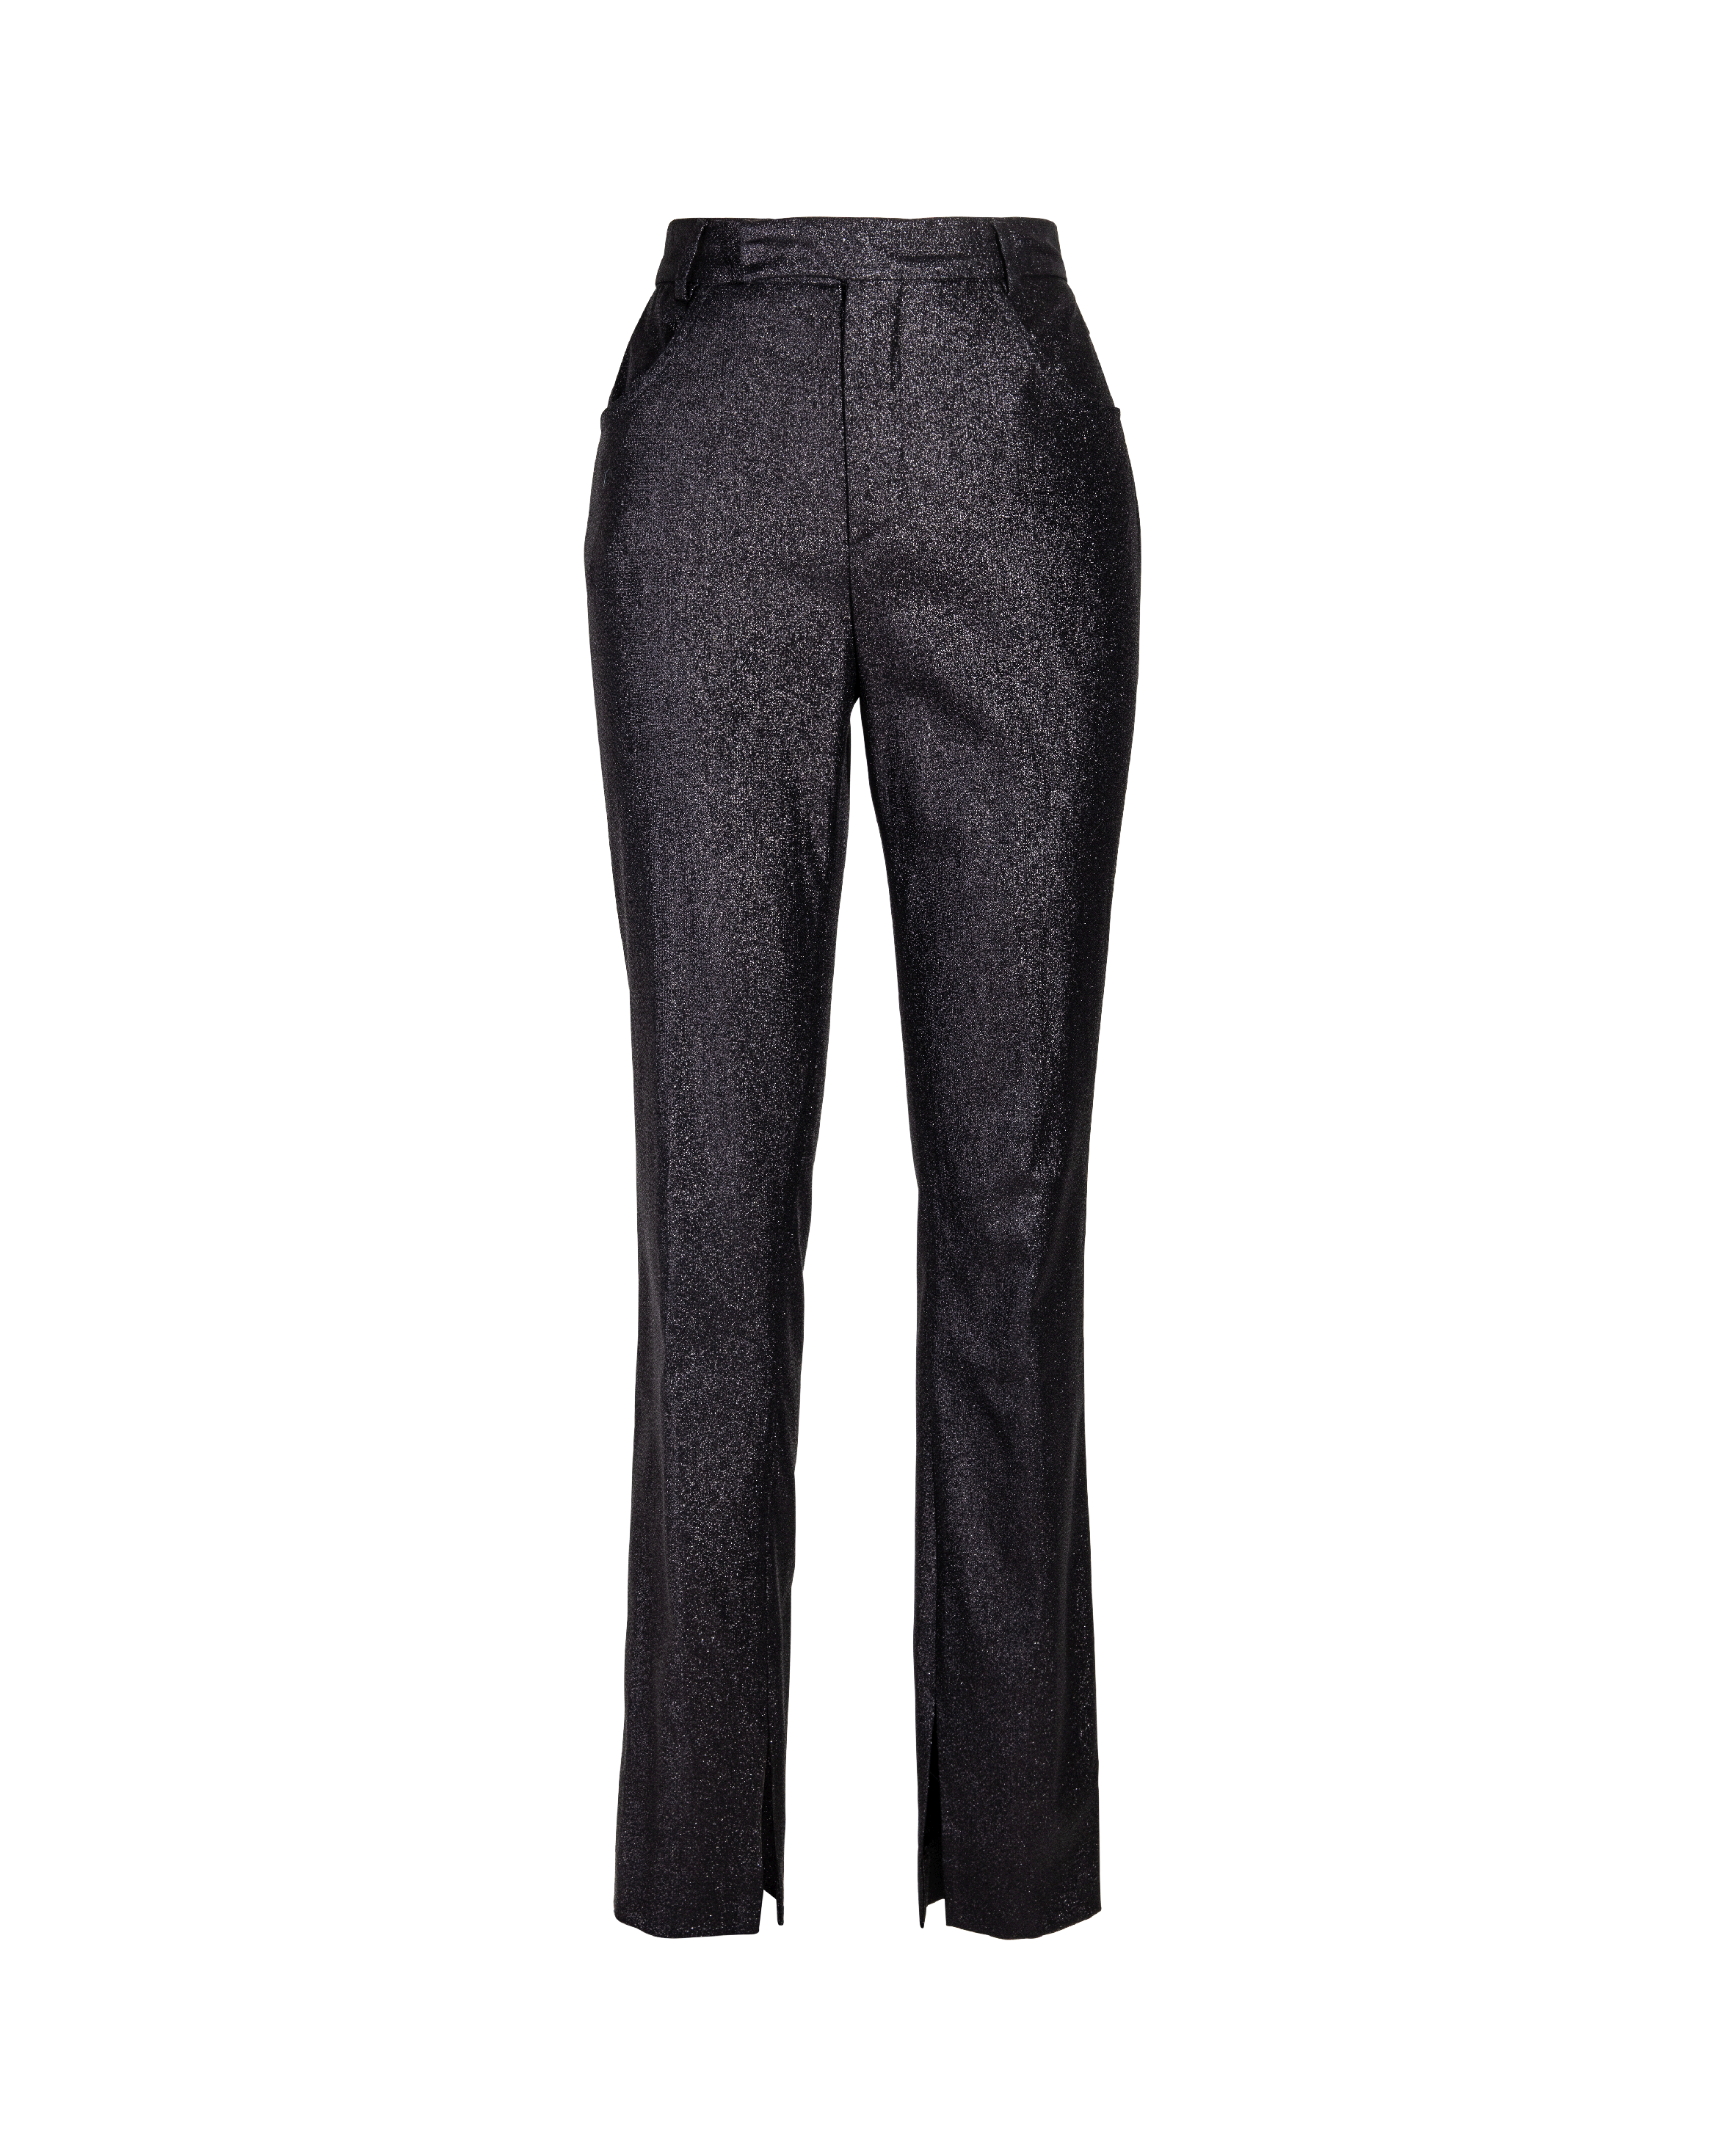 S/S 1997 Black Lurex Disco Pants